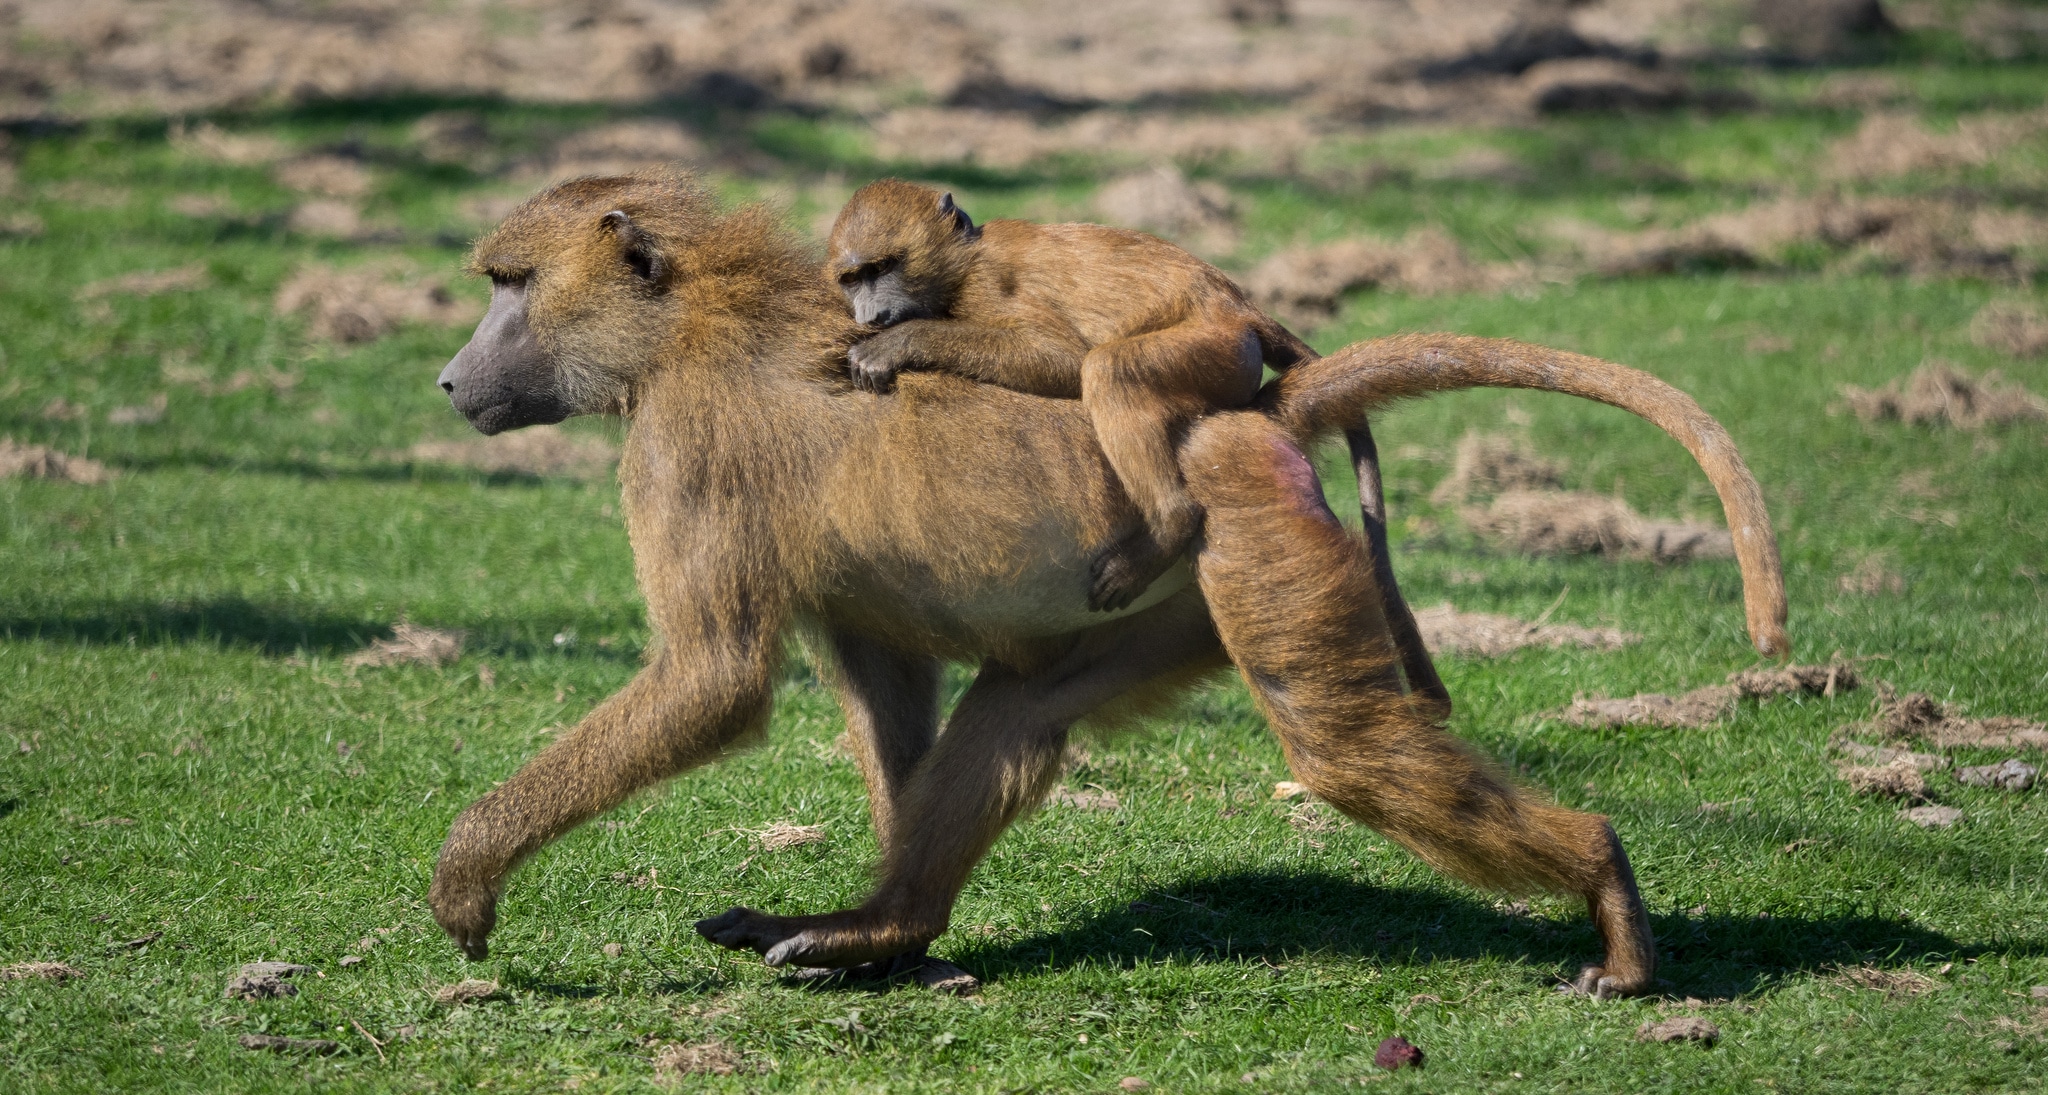 babouin de guinee, petit bebe, singe, primate d'afrique - Instinct animal